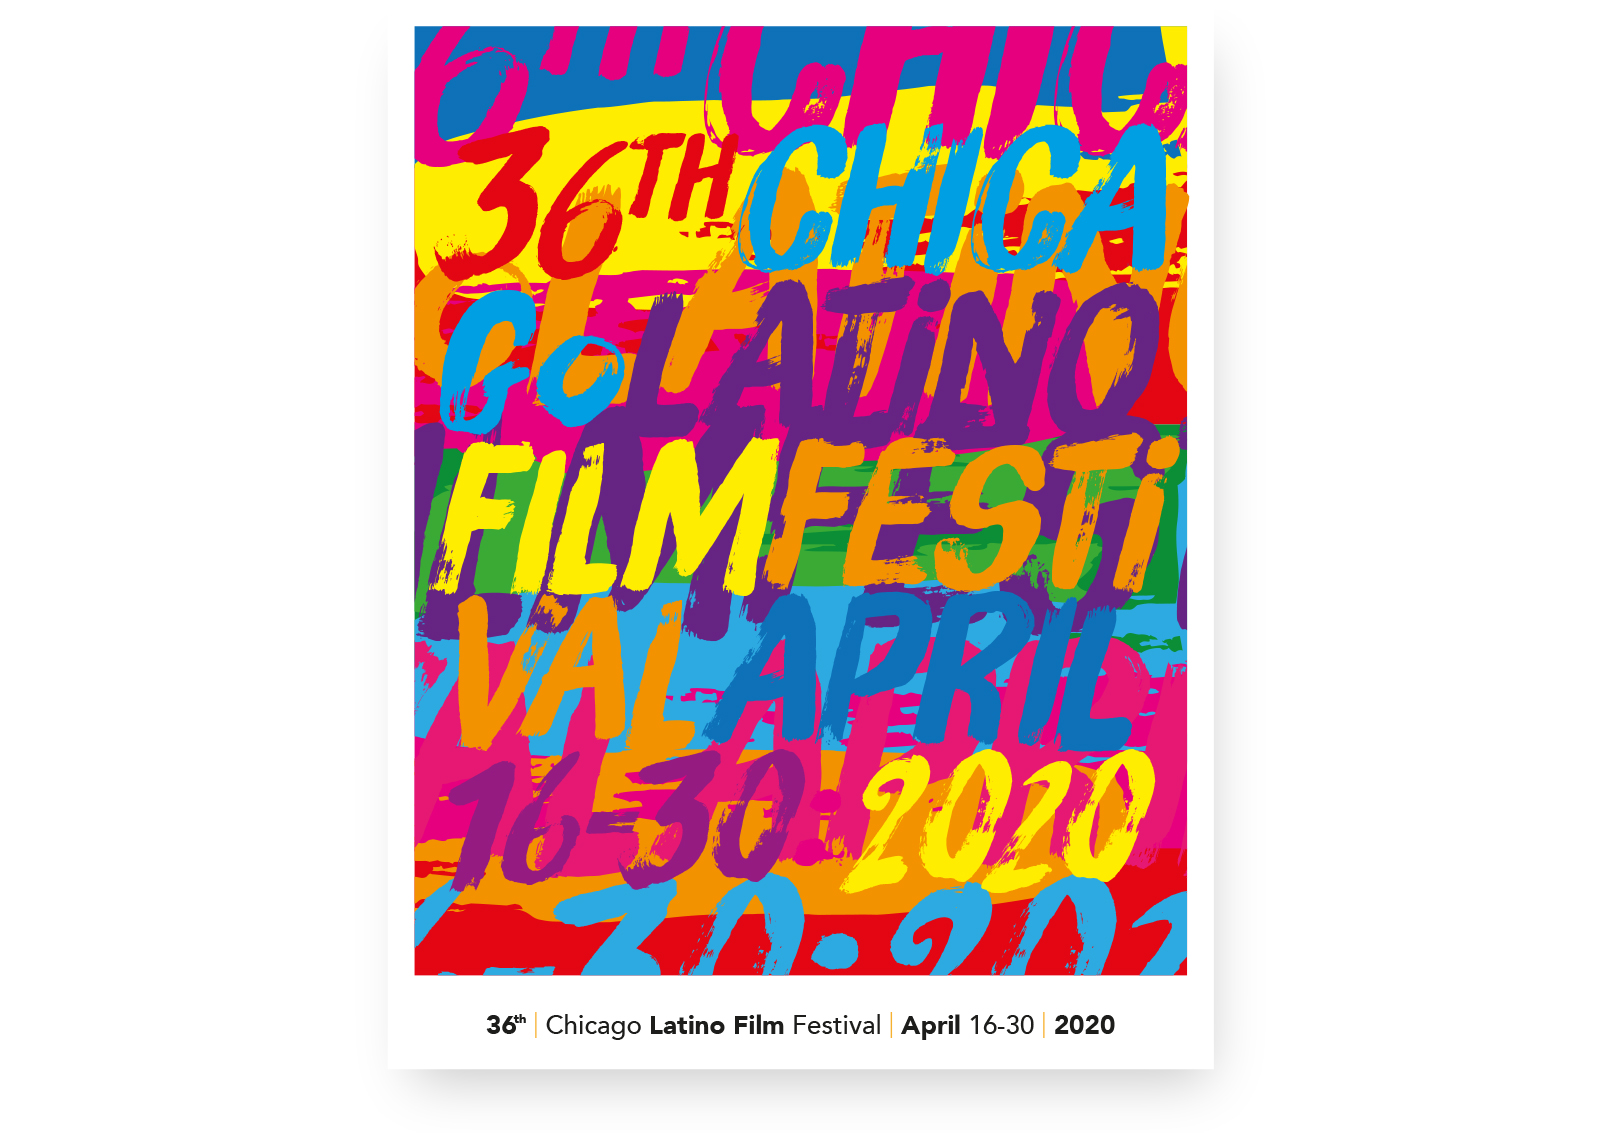 Pedro Cabañas - Design - 36th CHICAGO LATINO FILM FESTIVAL